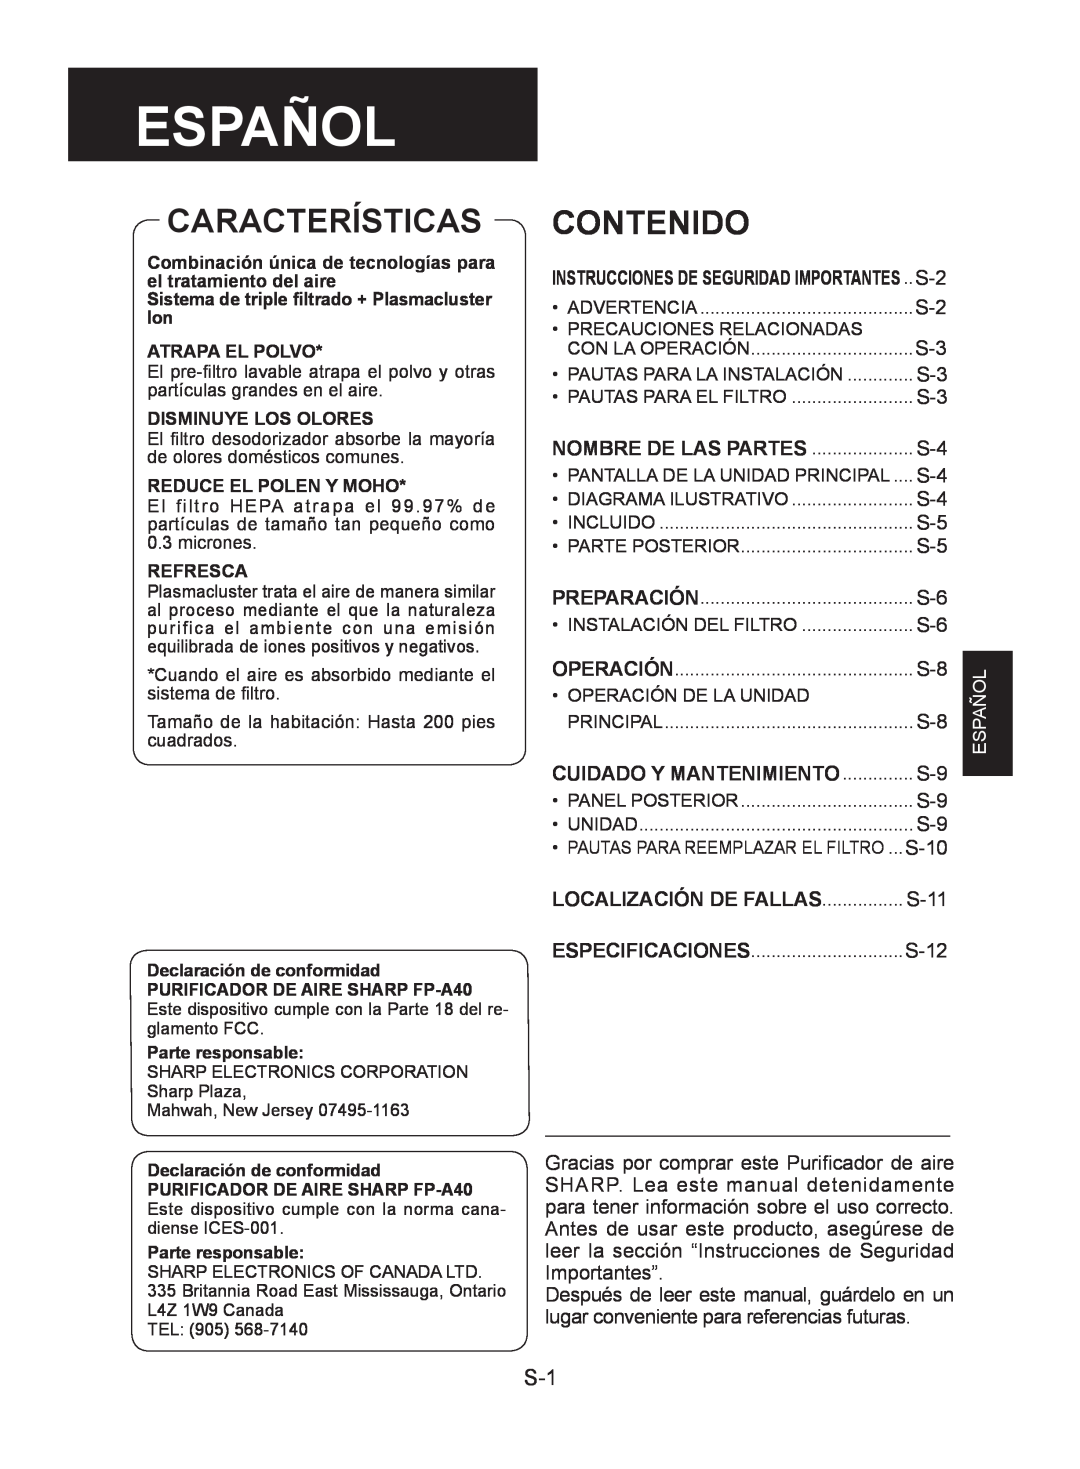 Sharp FP-A40C, FP-A40UW operation manual Español, Características, Contenido, Localización De Fallas 